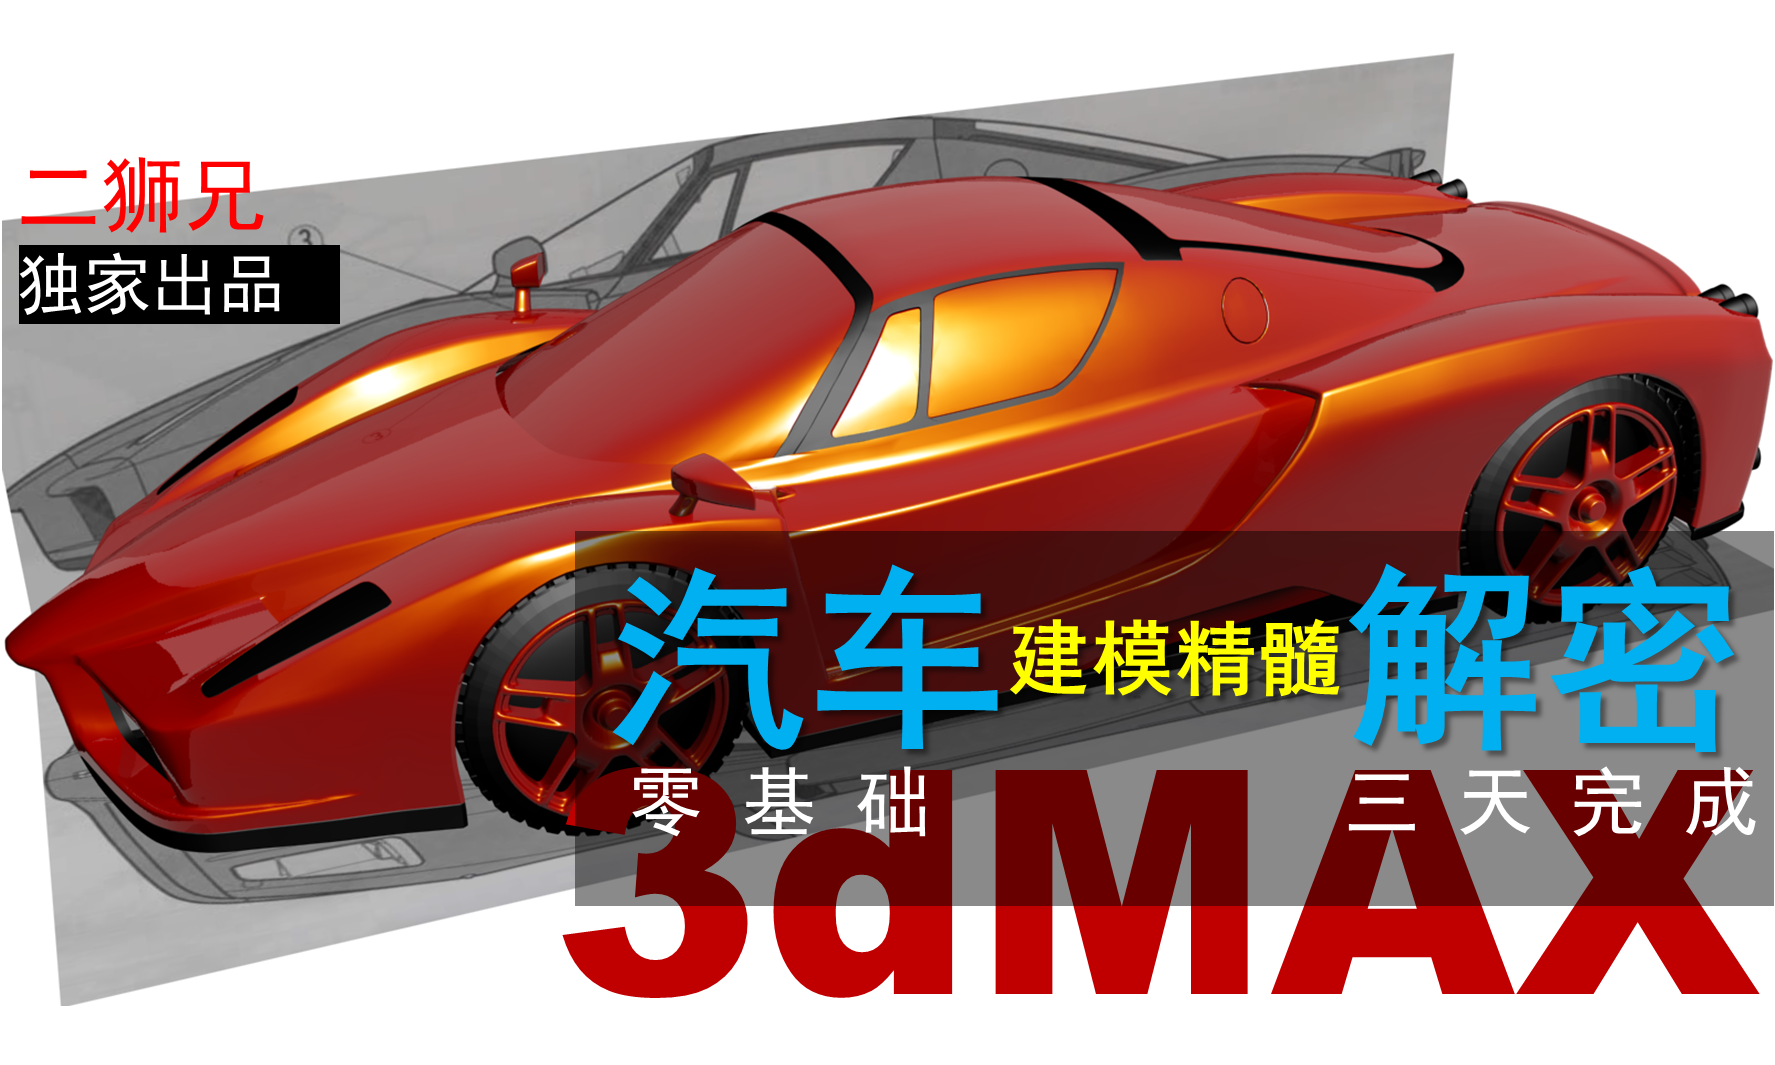 3dmax工业产品设计高级曲面-汽车建模视频教程5-细节塑造技术